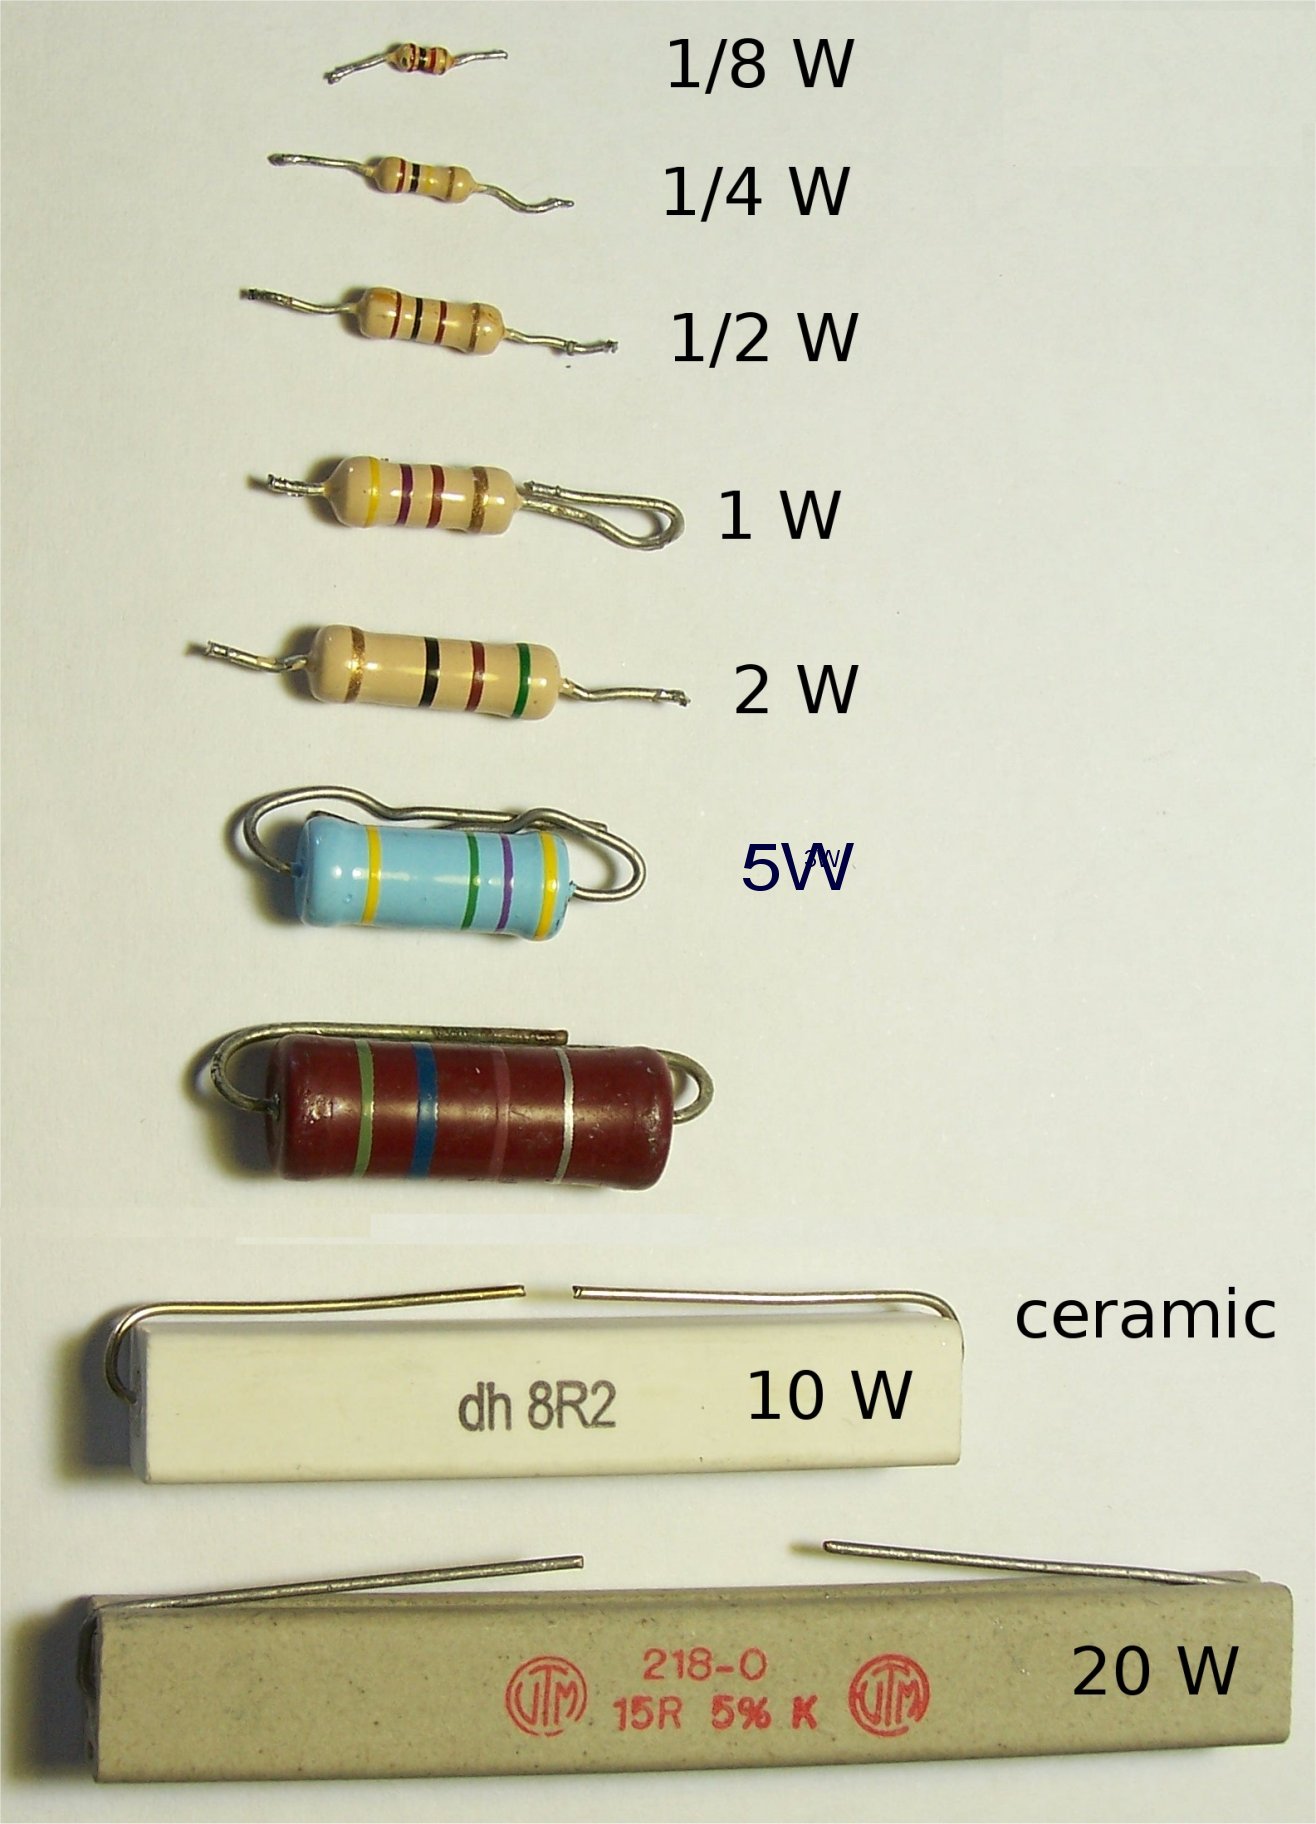 Resistor Wattage Size Chart